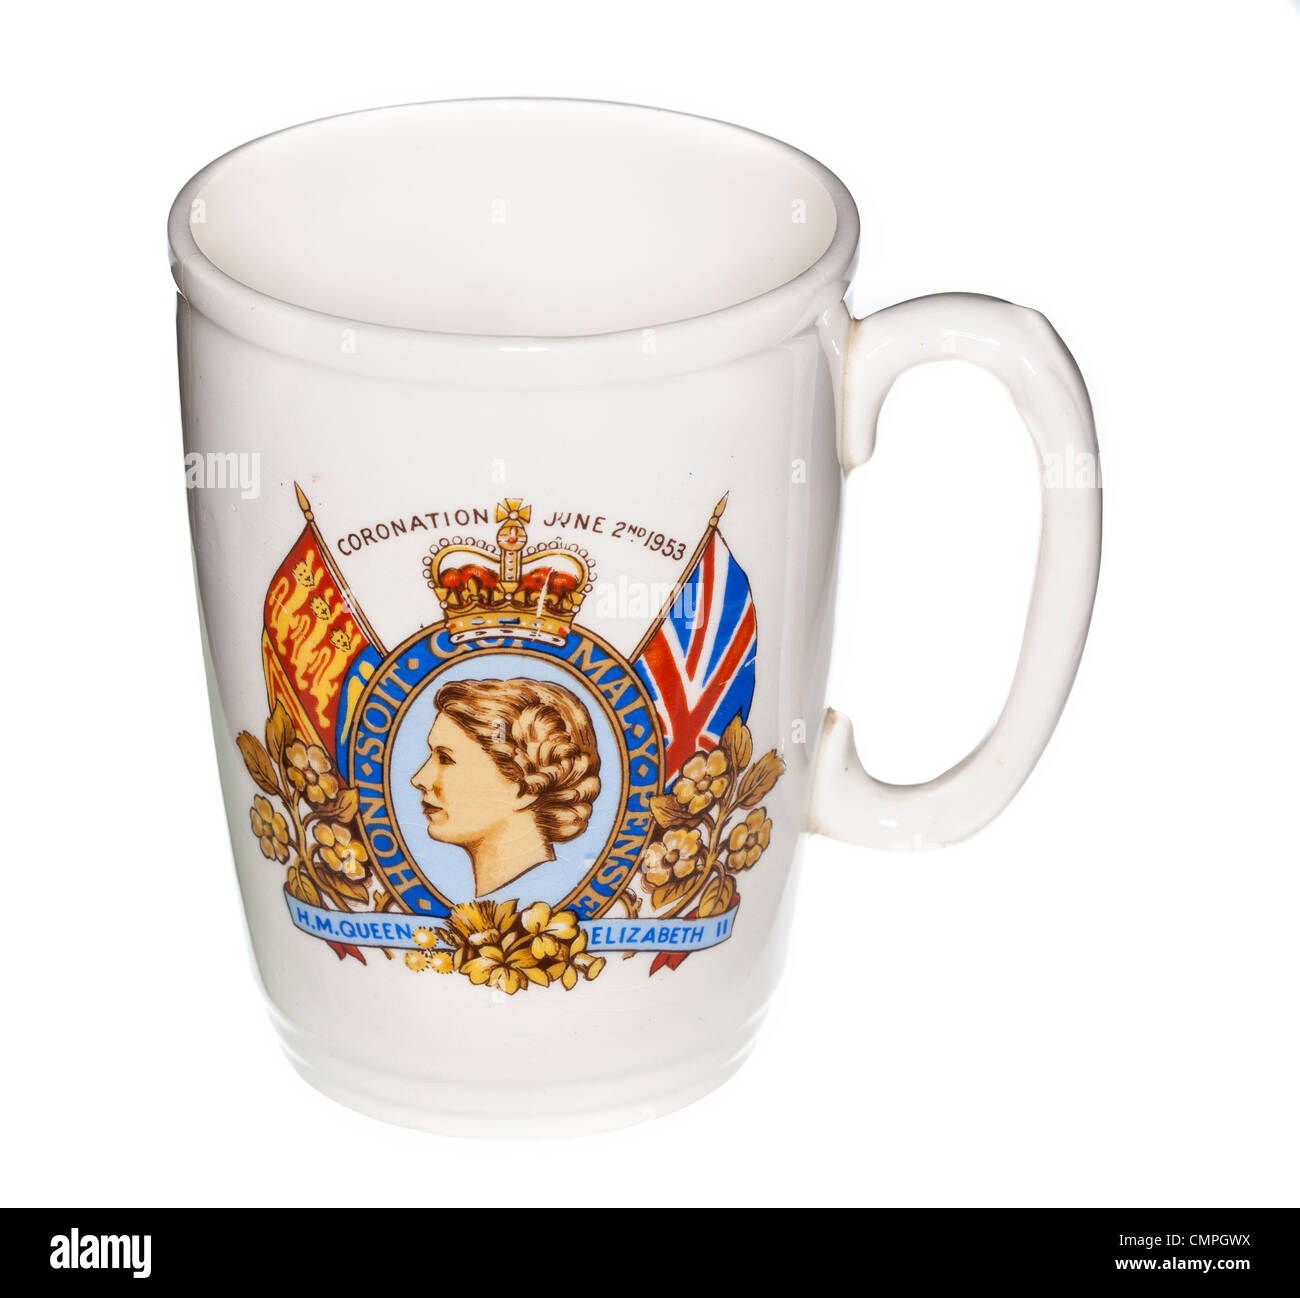 Coronation mug hi-res stock photography and images - Alamy